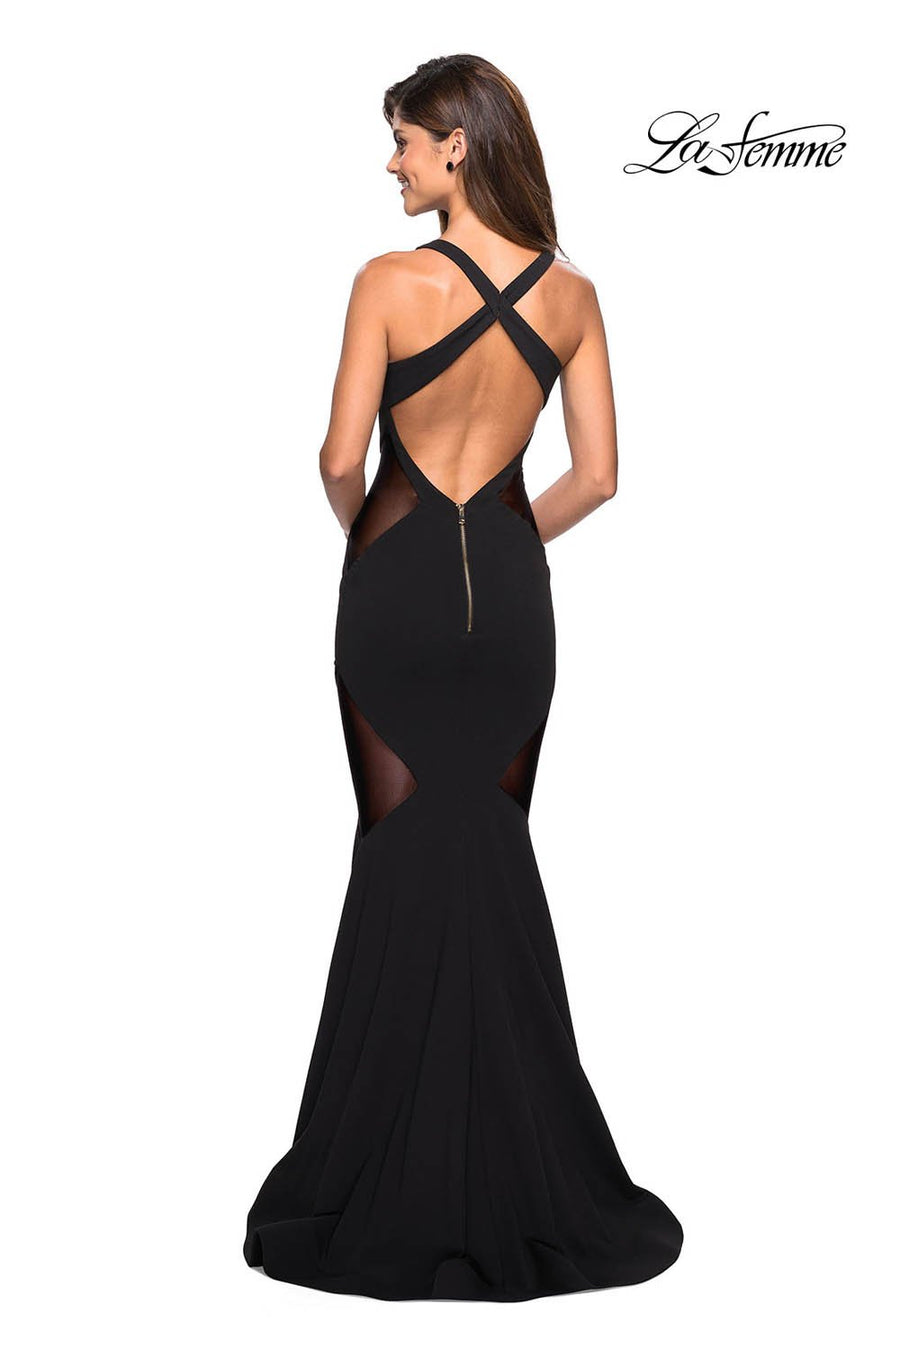 La Femme 27454 prom dress images.  La Femme 27454 is available in these colors: Black.